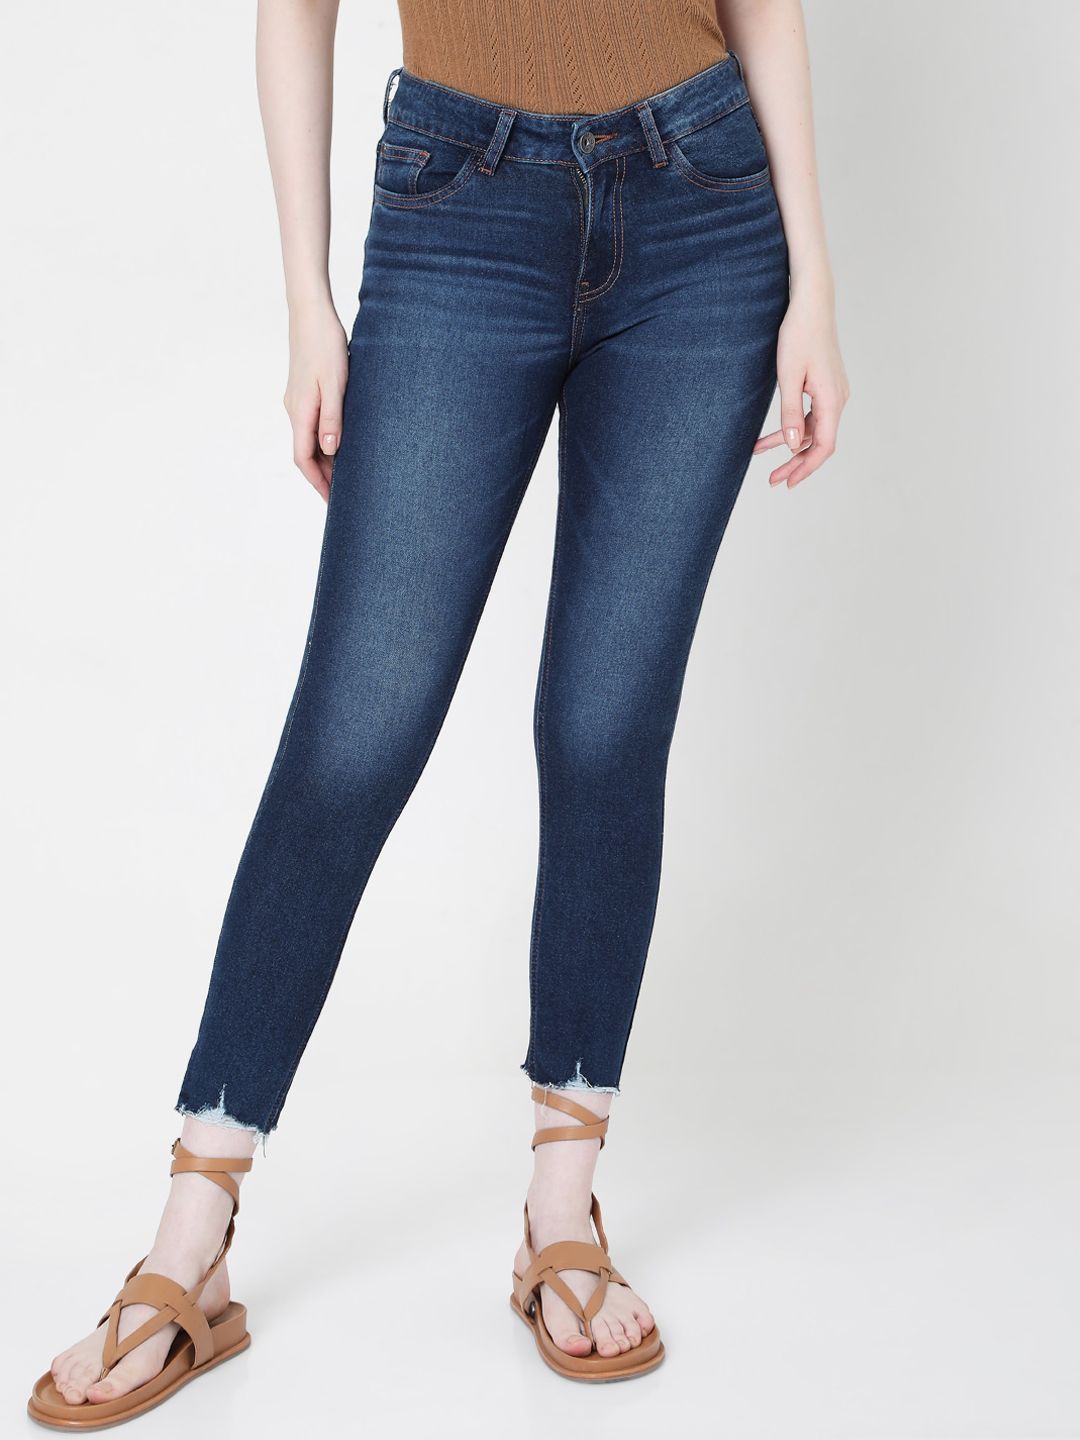 Vero Moda Women Blue Slim Fit Light Fade Jeans Price in India